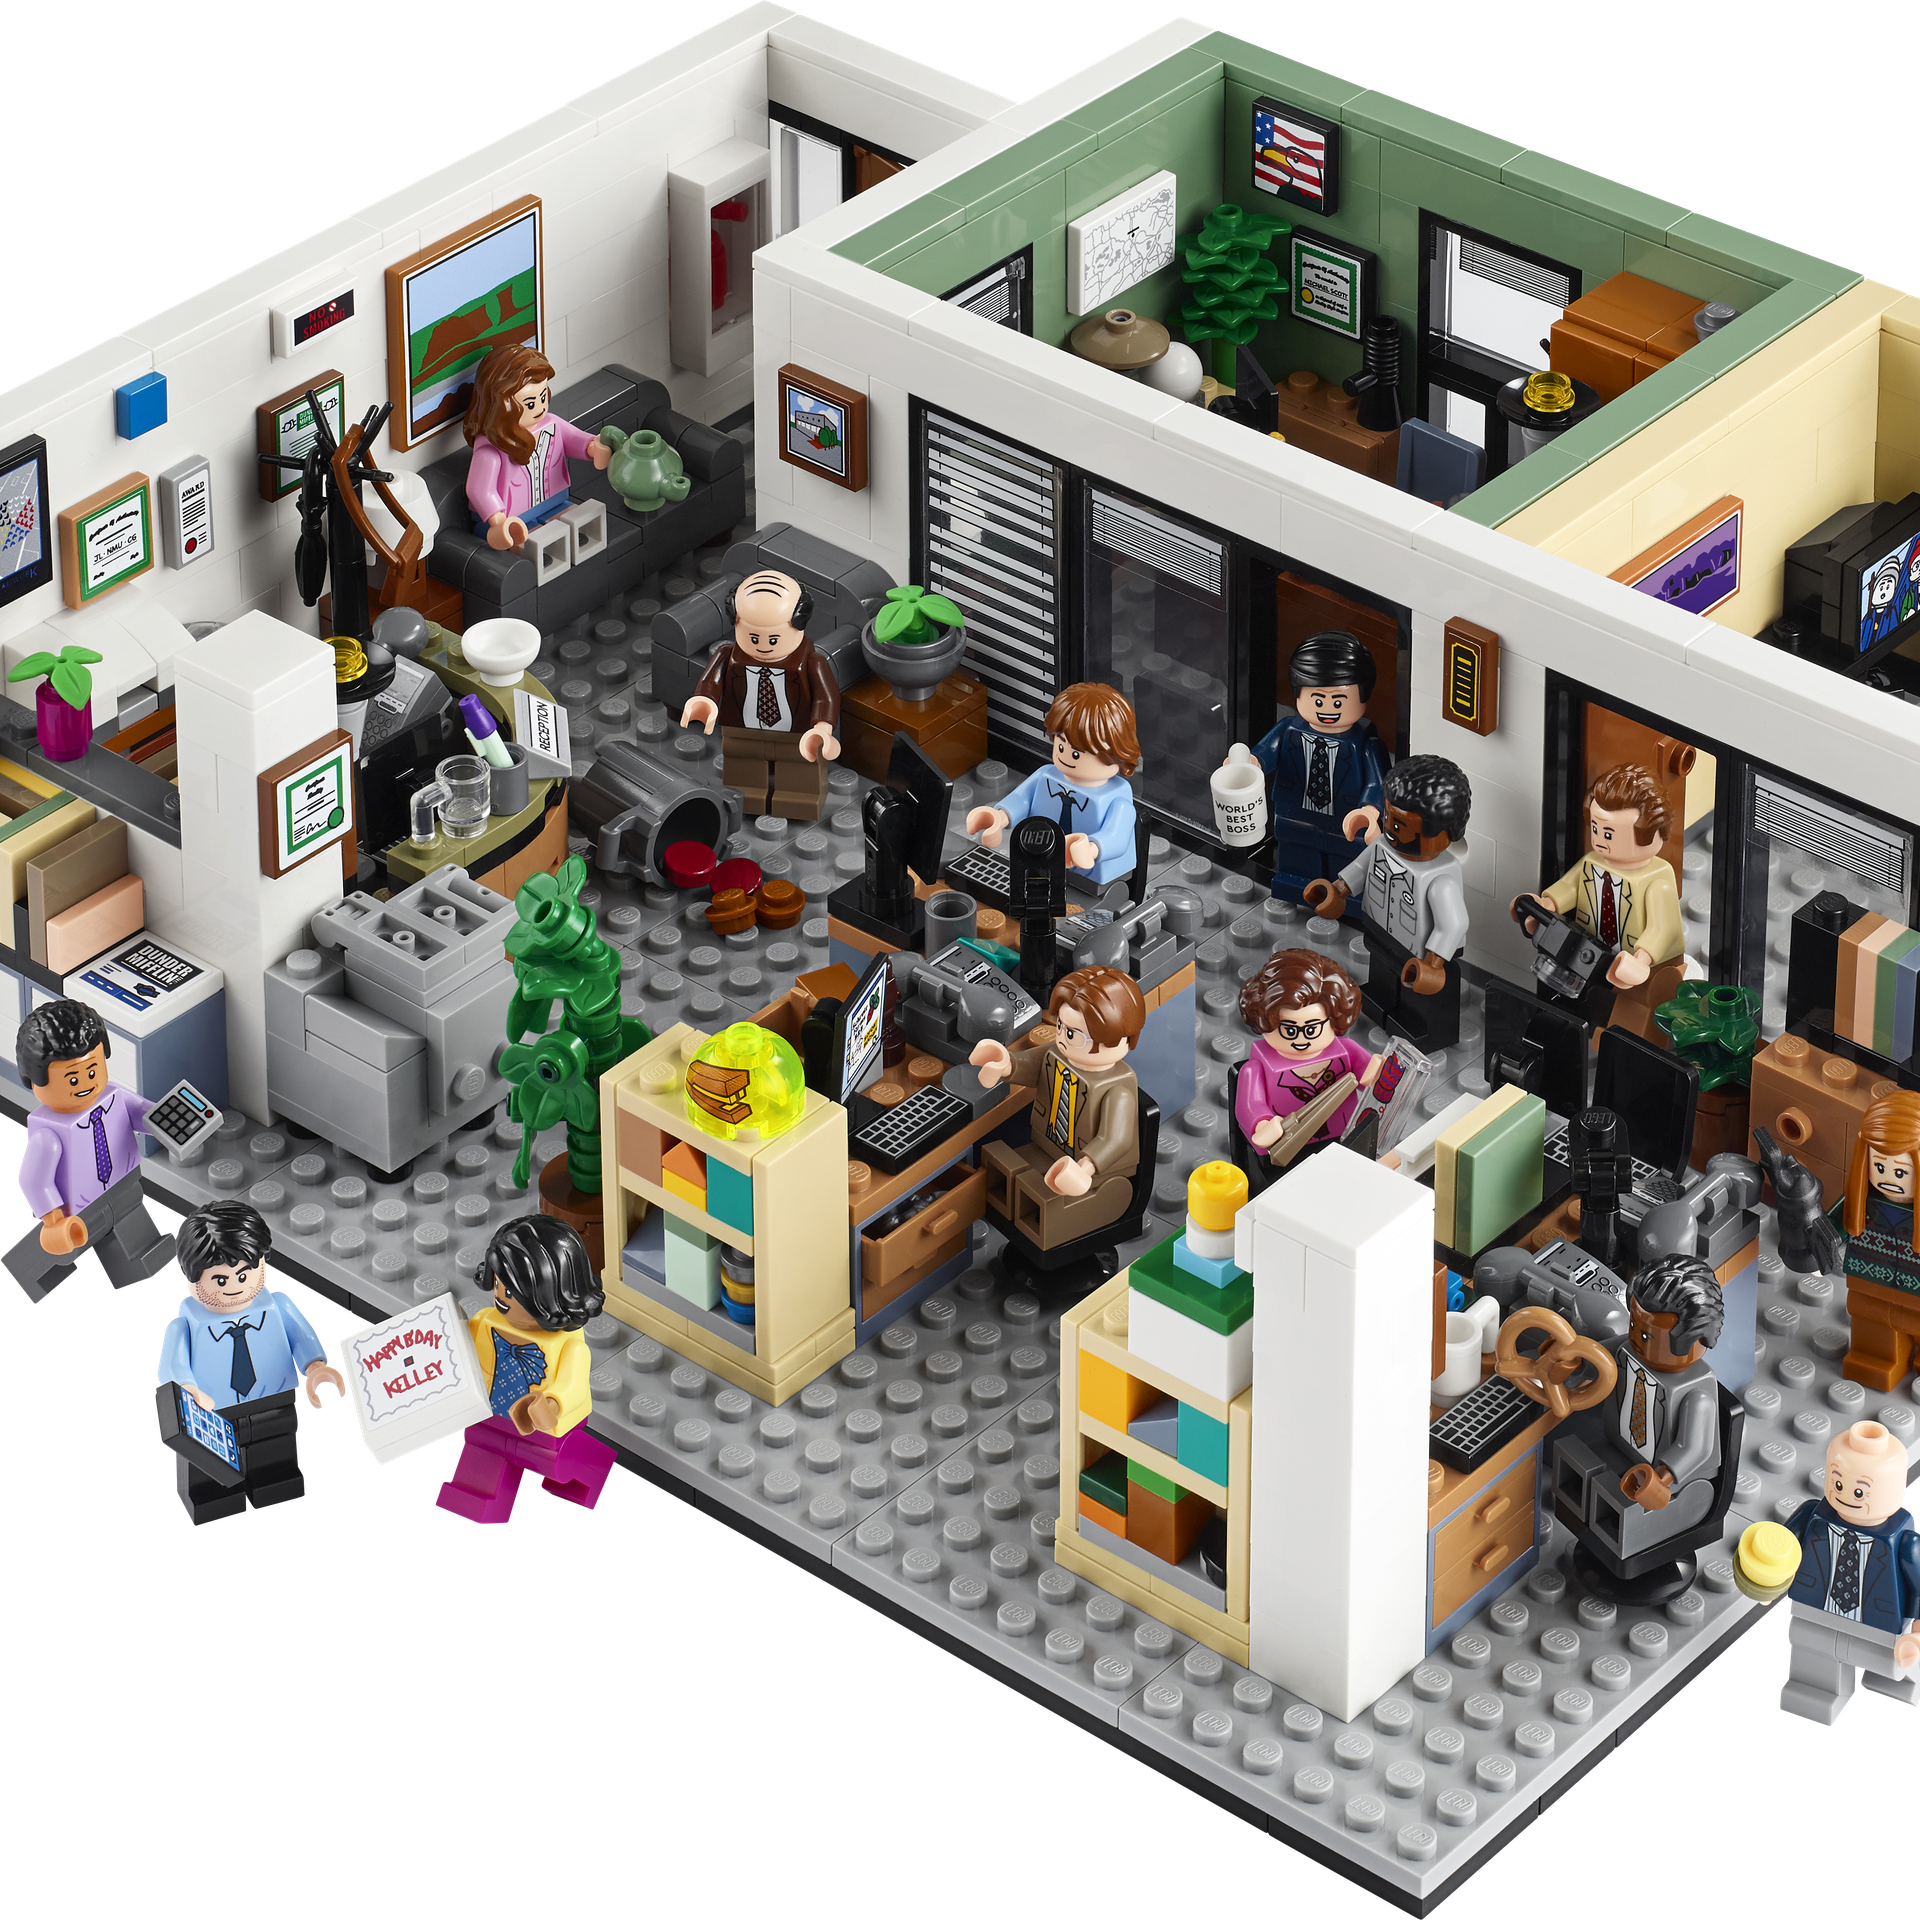 Lego re-creates The Office's Dunder Mifflin Scranton